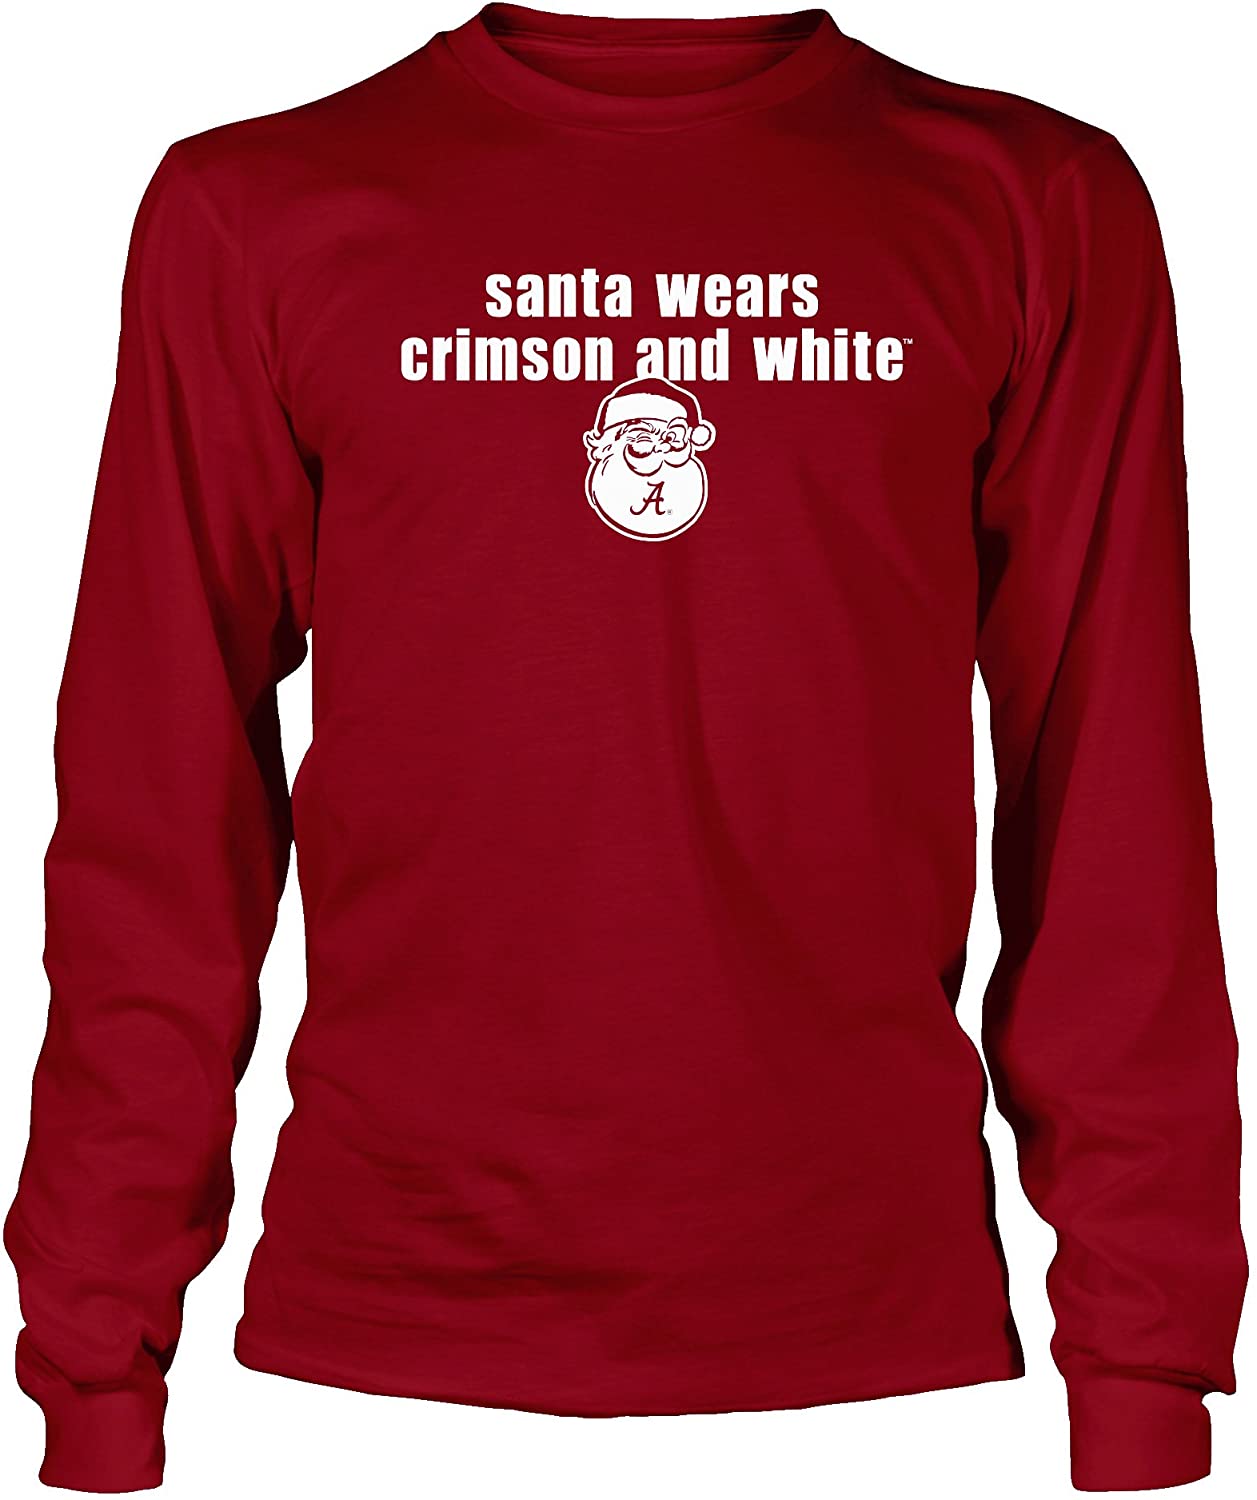 Alabama Crimson Tide T-Shirt - All Conference Apparel - Santa Wears And White - Christmas - Long Sleeve - Crimson